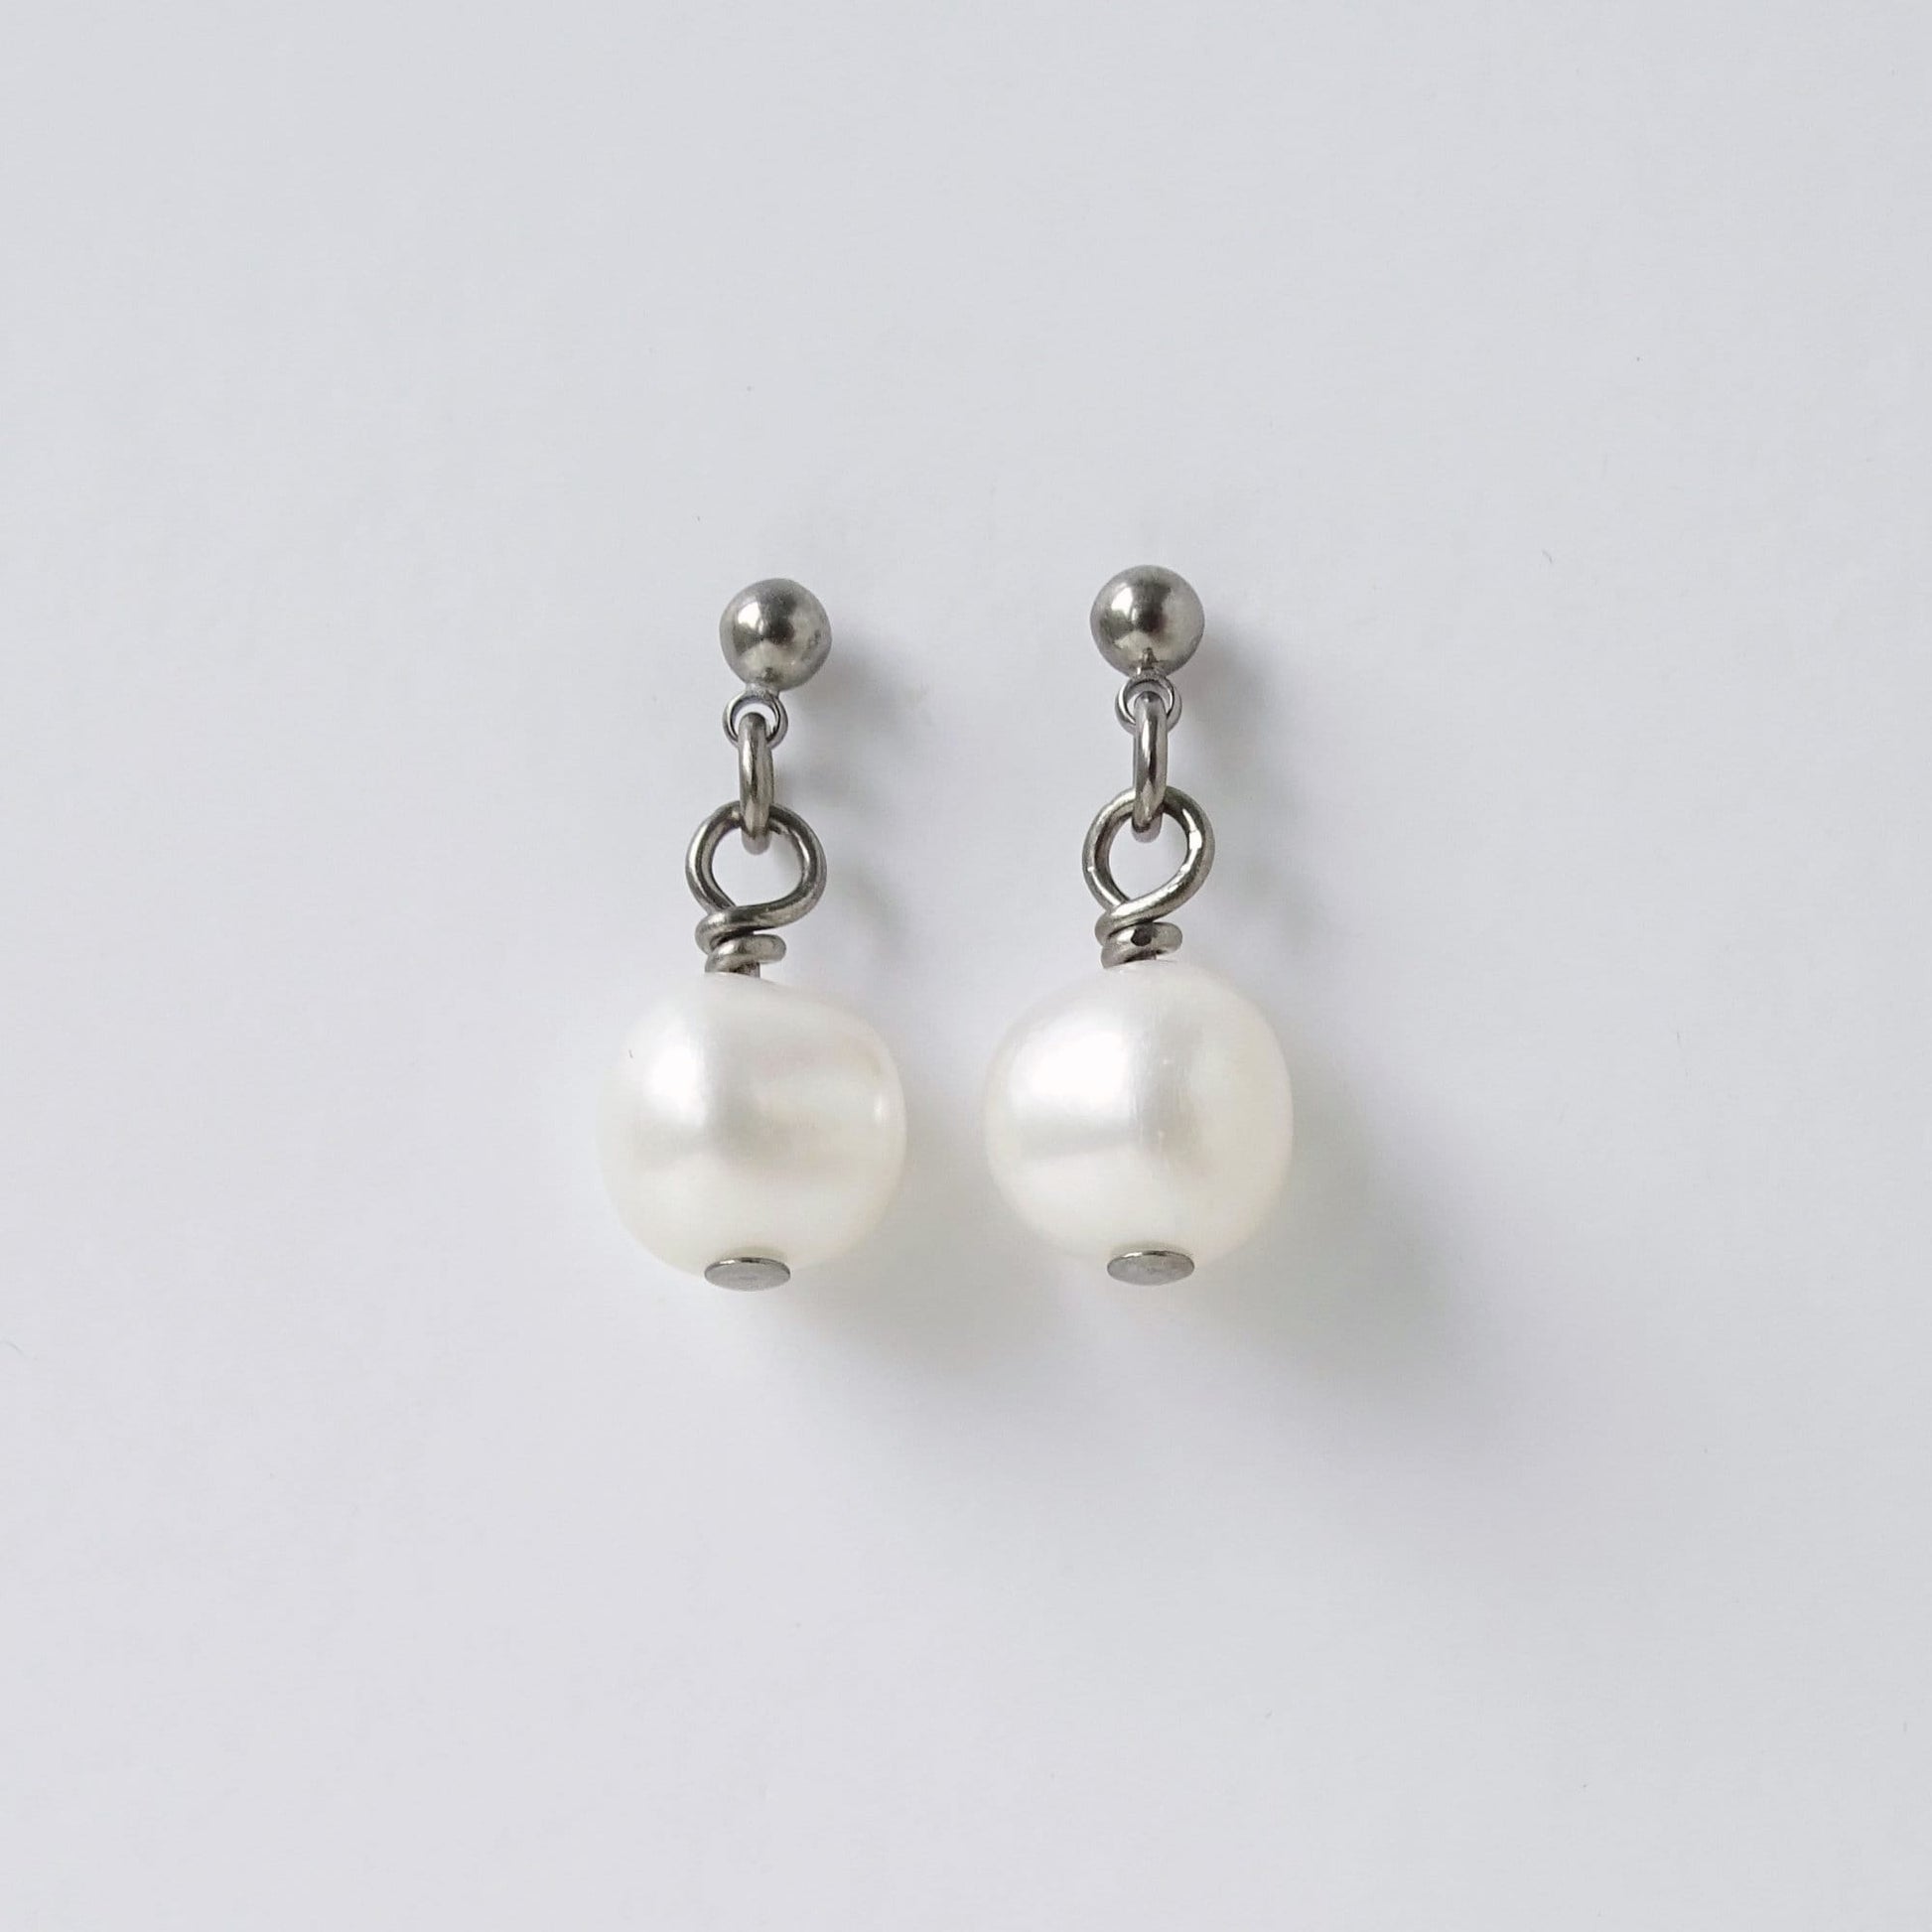 White Pearl Dangle Ball Stud Earrings, Titanium Posts Earrings for Sensitive Ears Freshwater Pearls Hypoallergenic Nickel Free Earrings